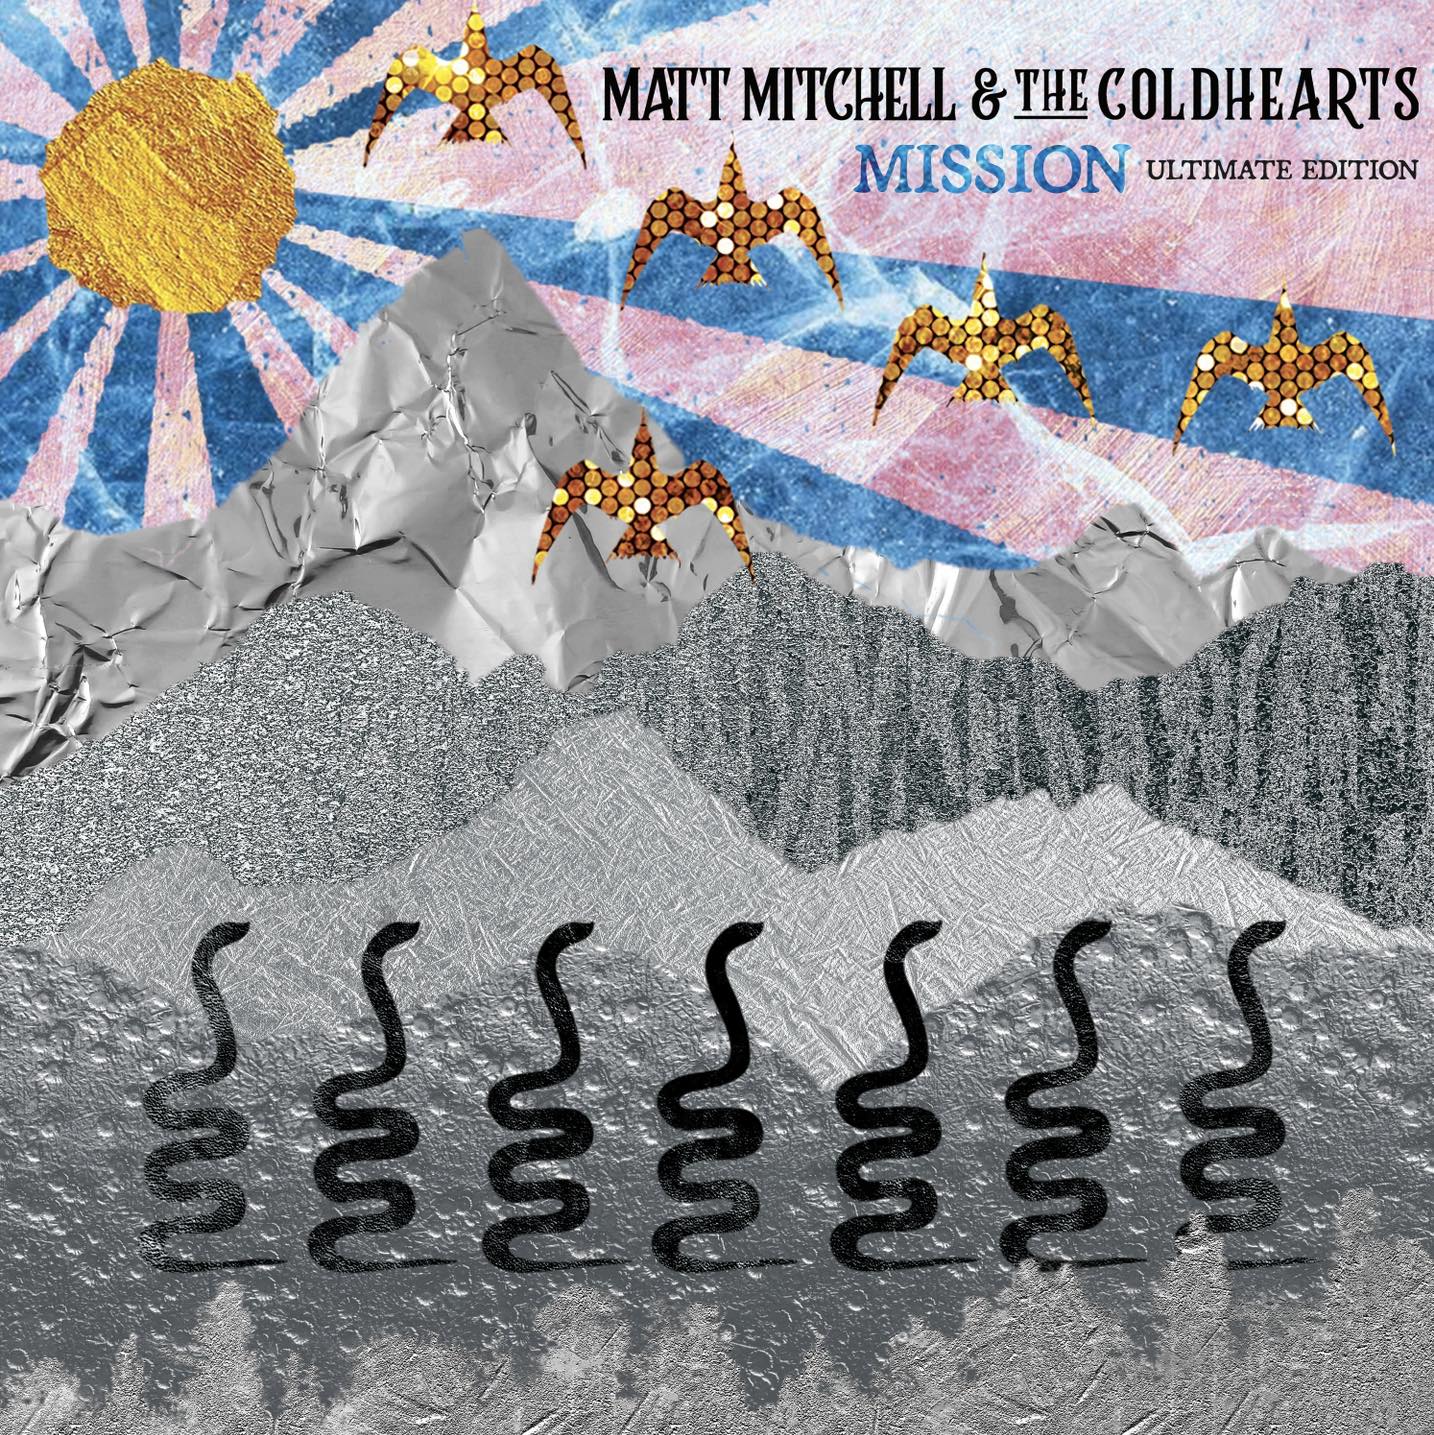 Matt Mitchell and the Coldhearts